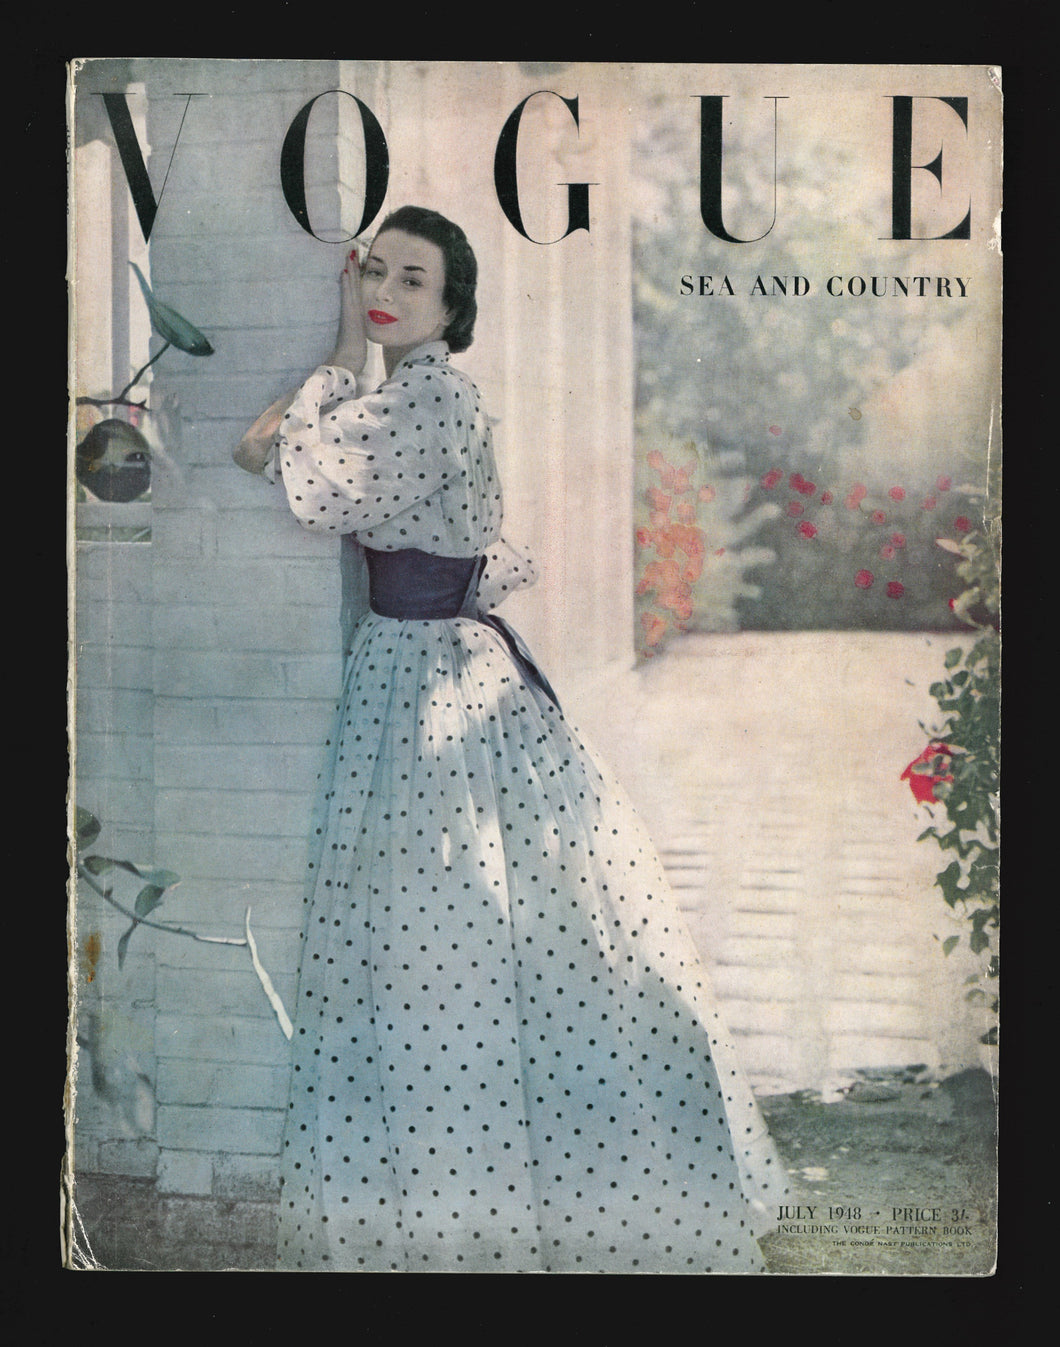 Vogue UK July 1948